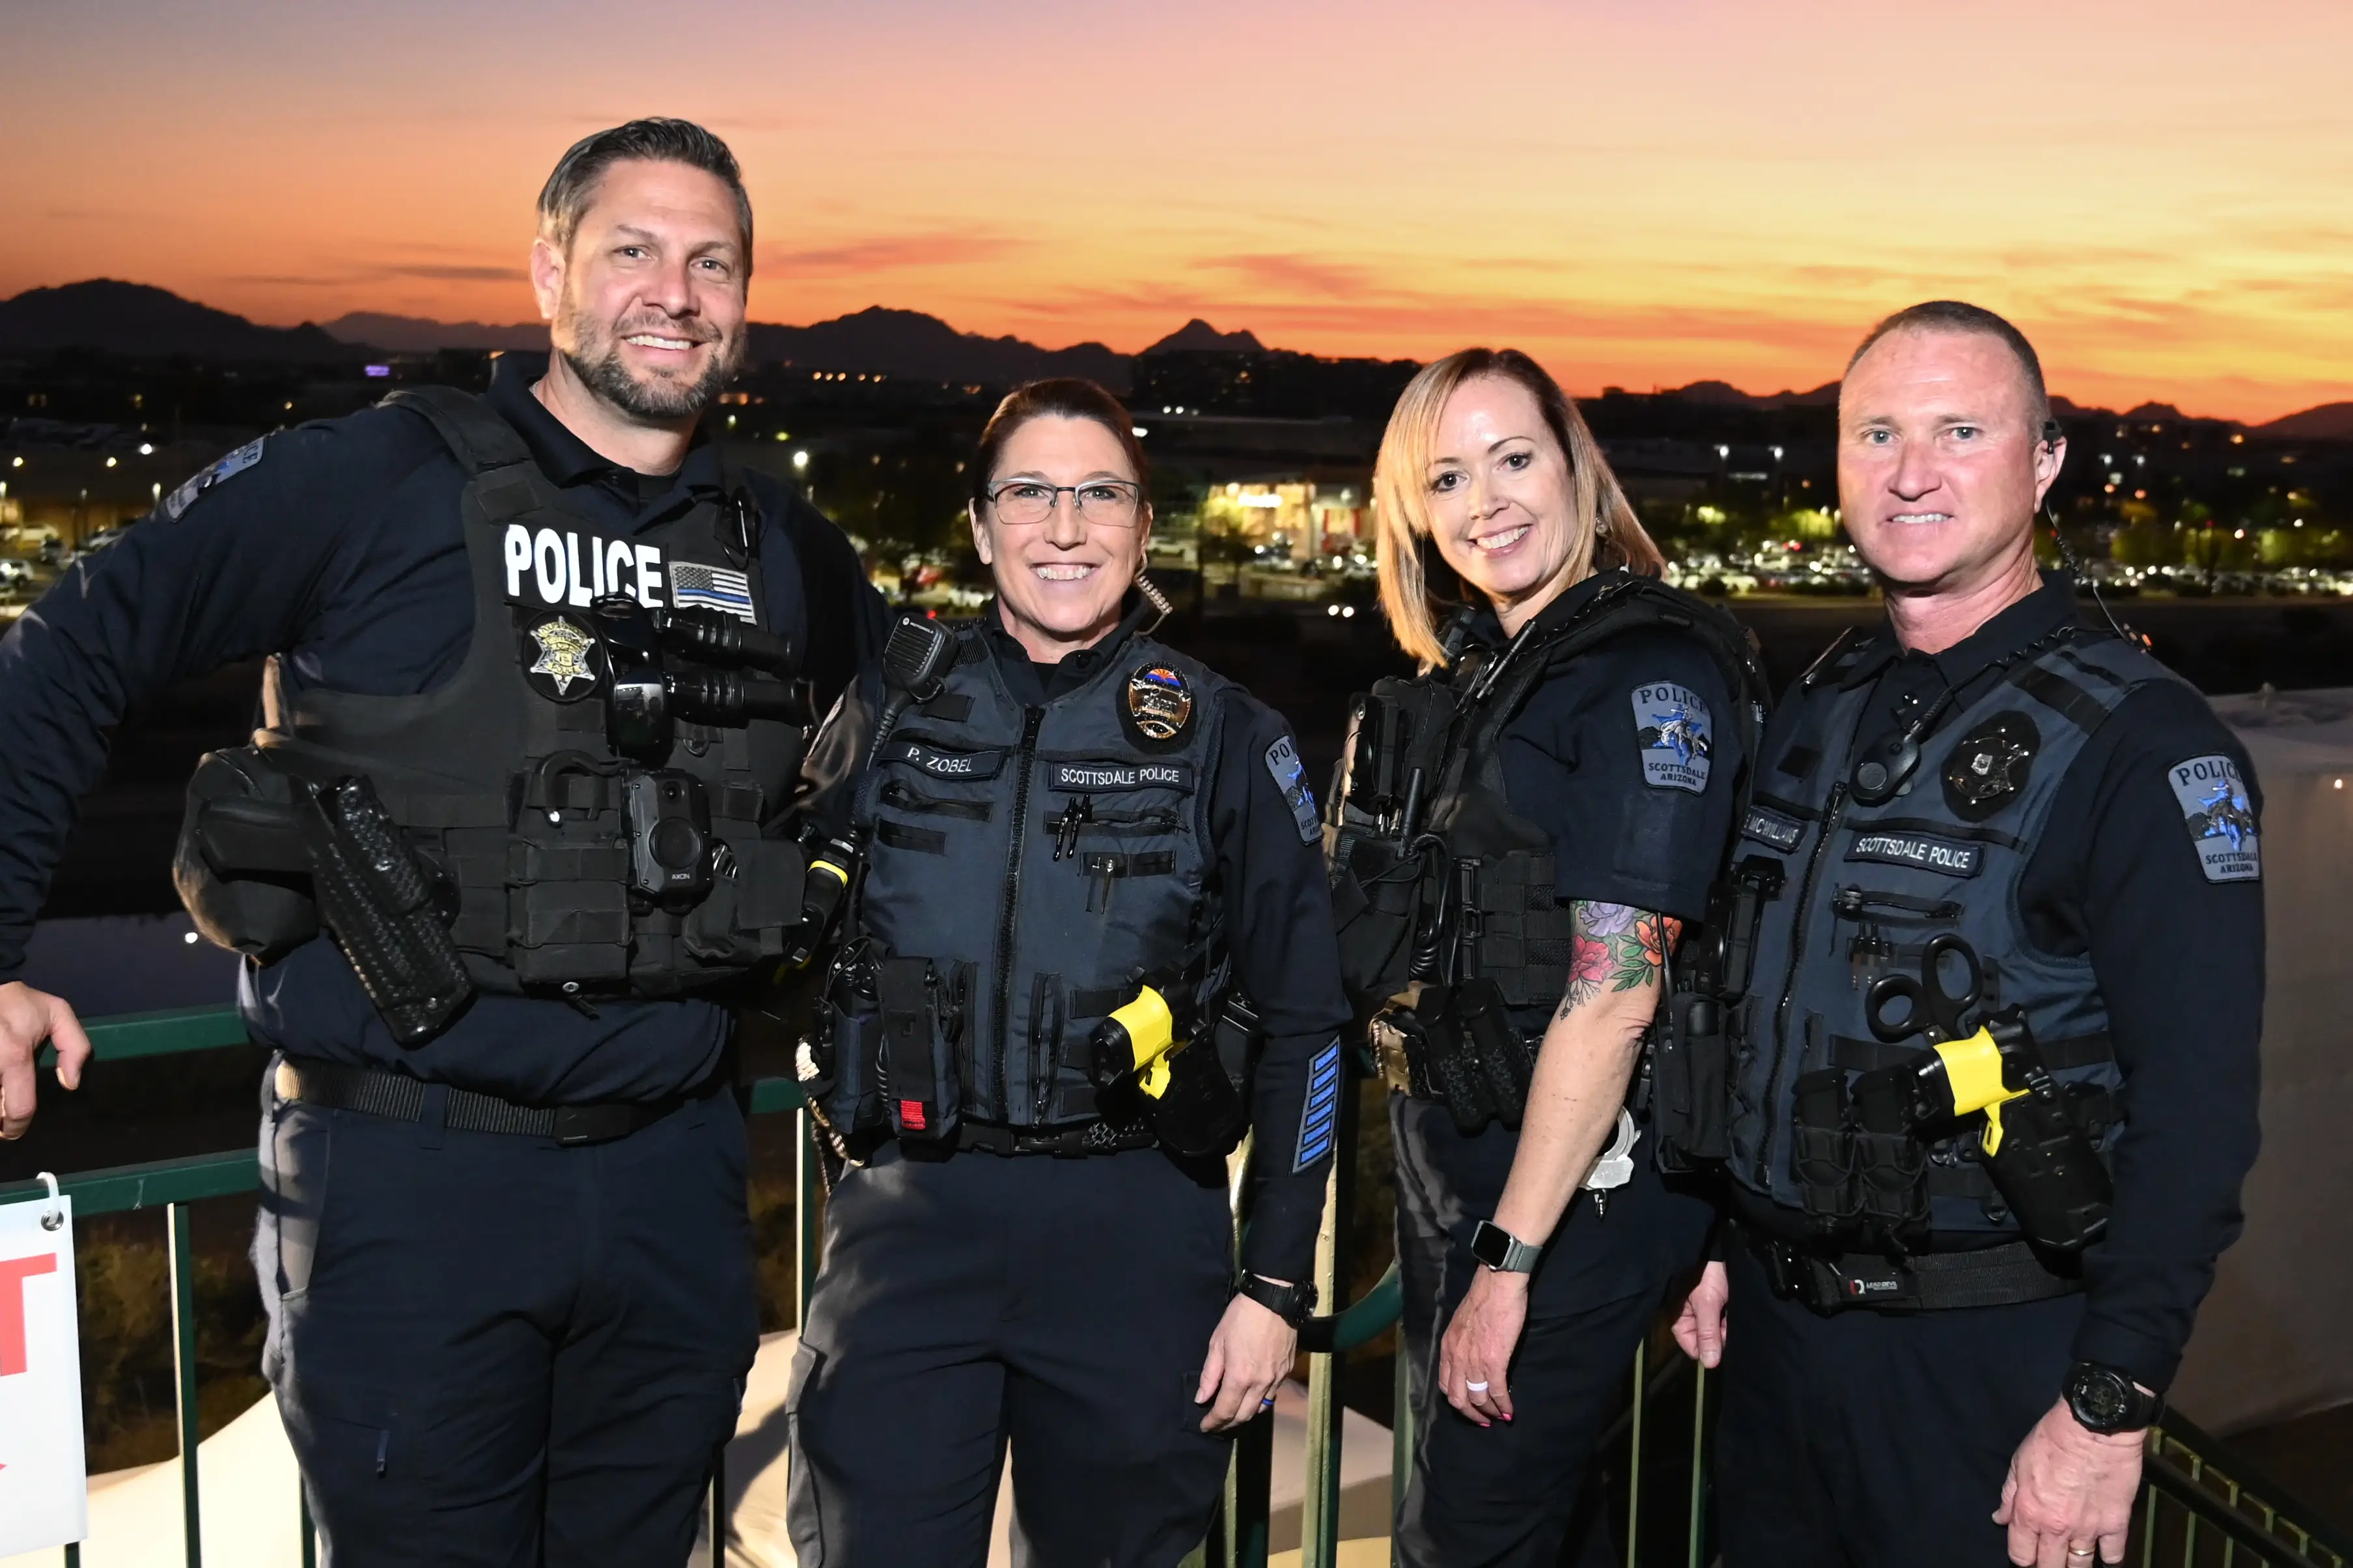 Scottsdale Police Officers against a desert sunset